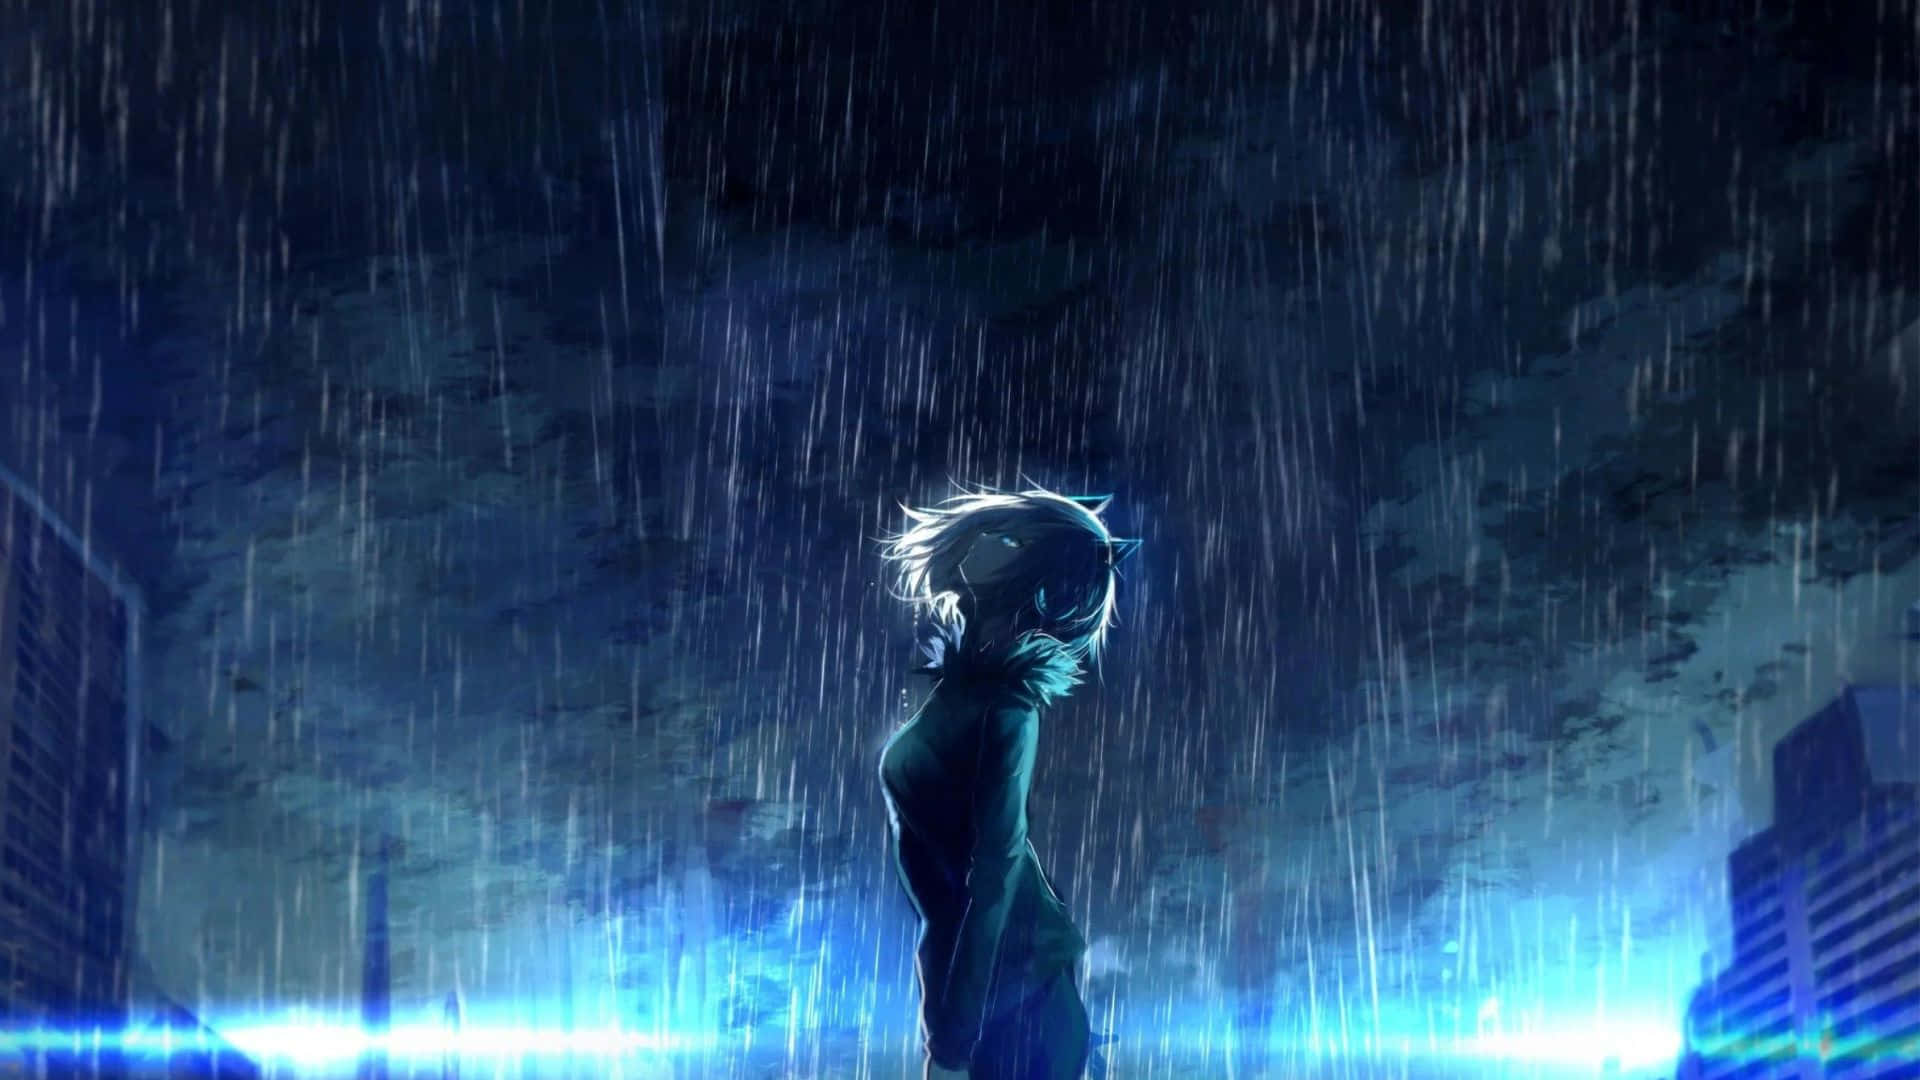 Beautiful rain anime wallpaper for your device screen